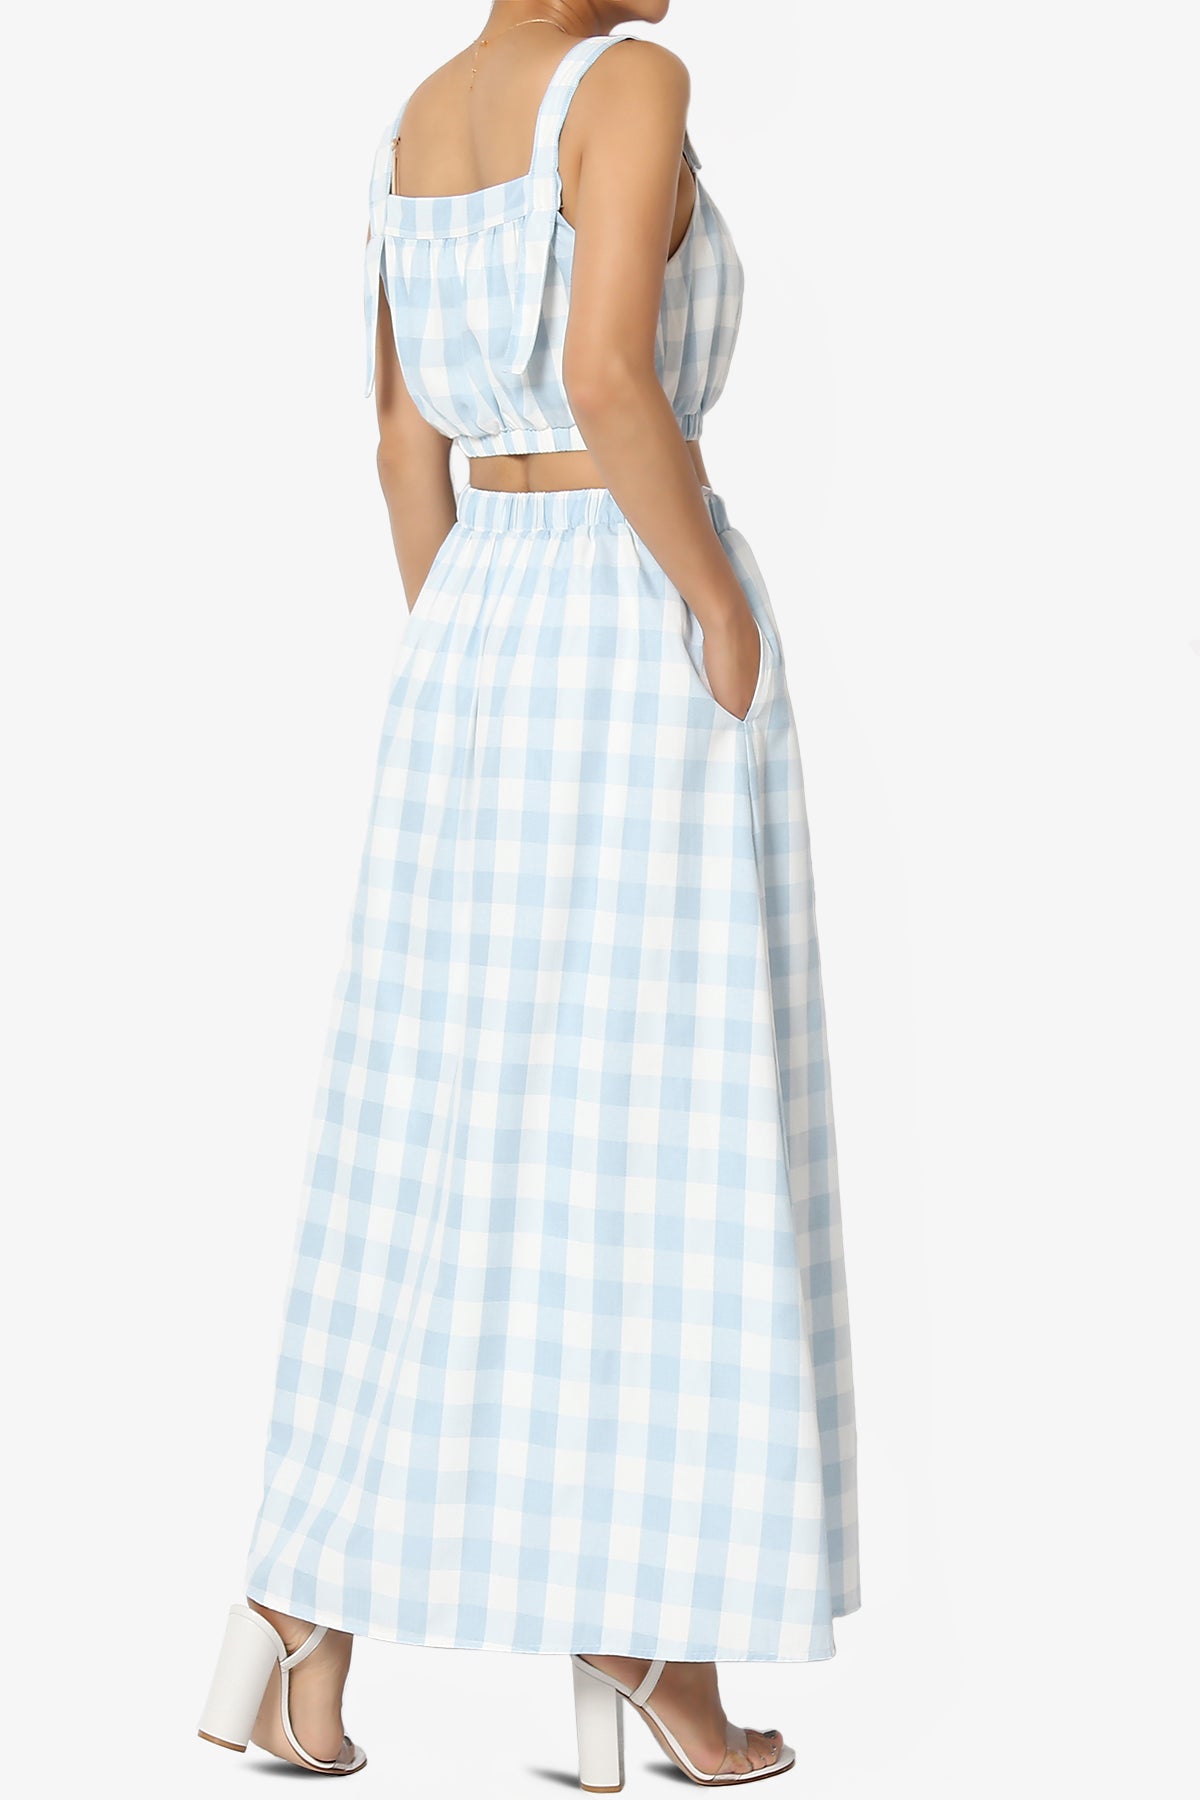 Hamiss Gingham Crop Top & Flare Skirt Set in Blue